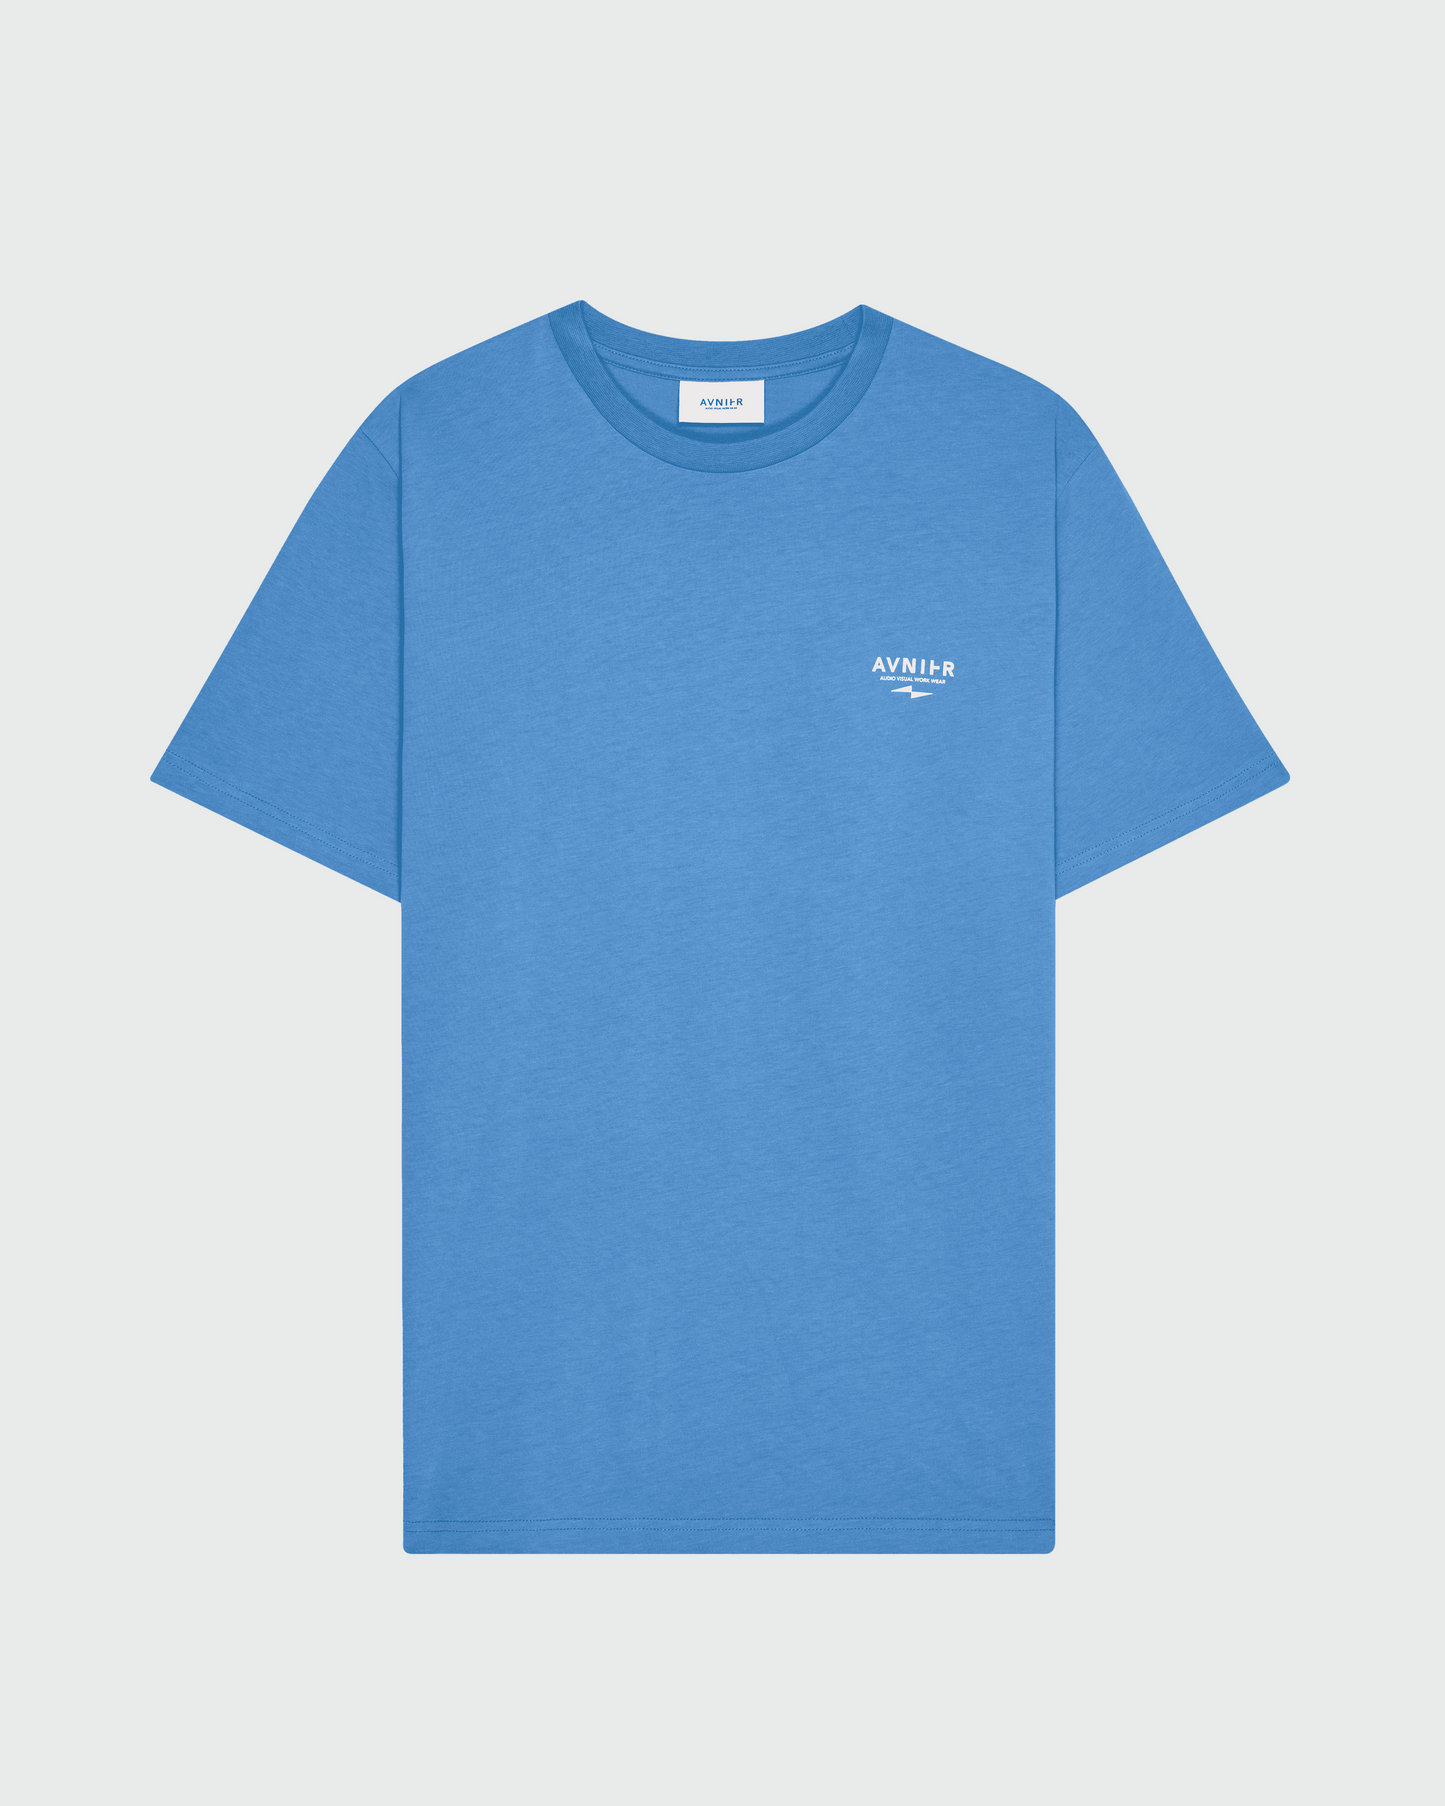 t-shirt-source-bleu-horizon-avnier-avnier-4-silhouette-look - bleu horizon